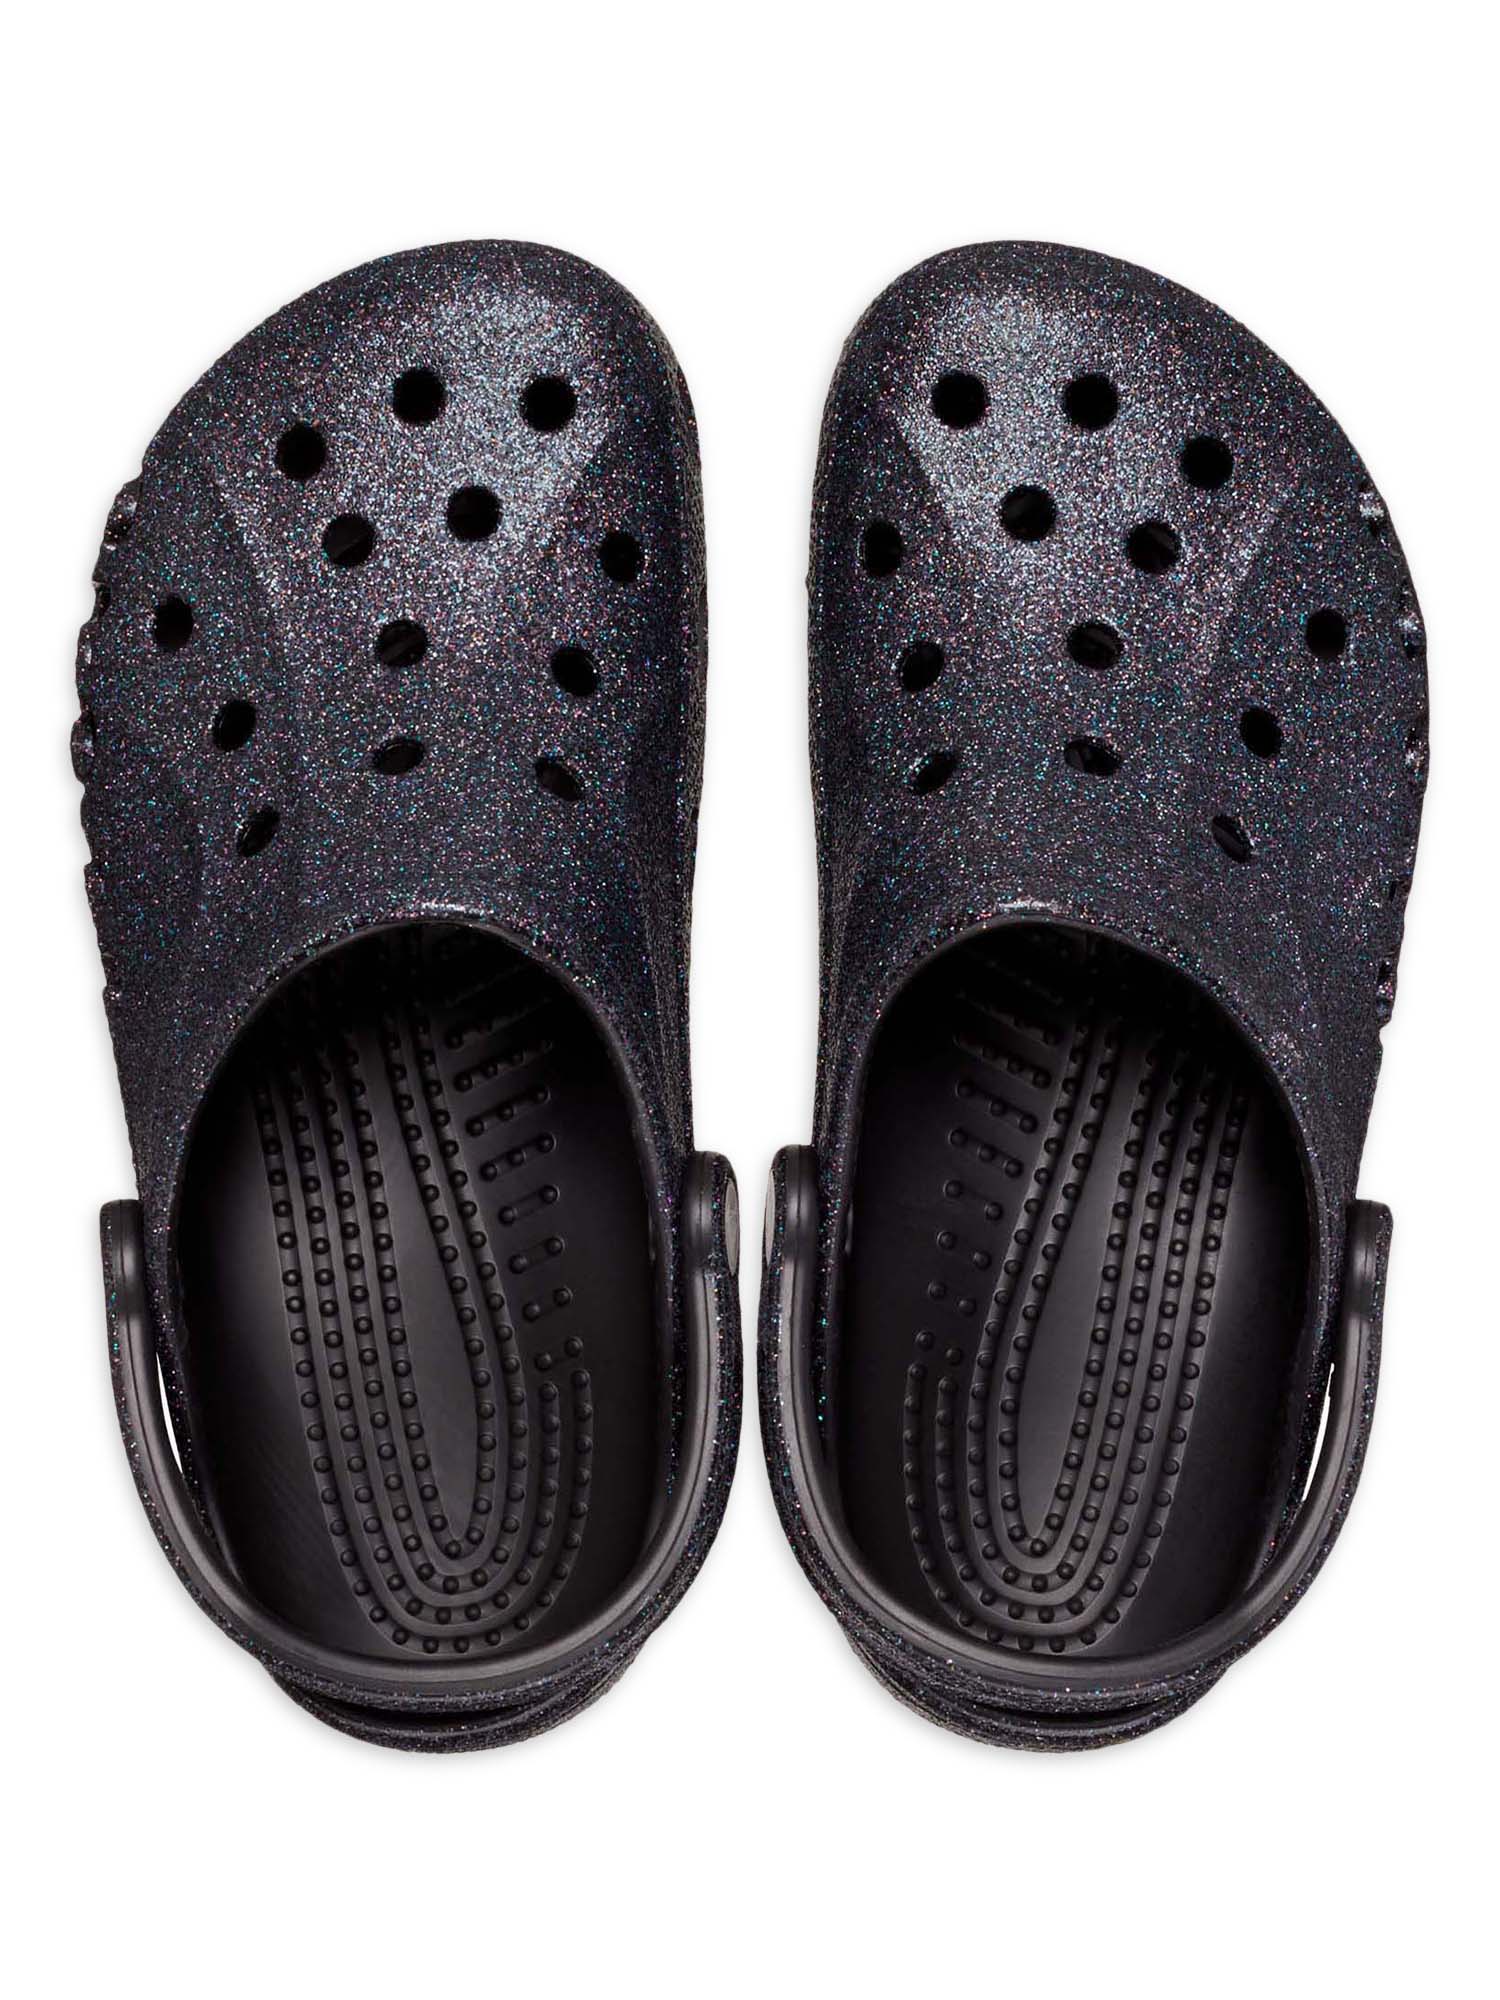 Crocs Unisex Baya Glitter Clog Sandal - image 5 of 7